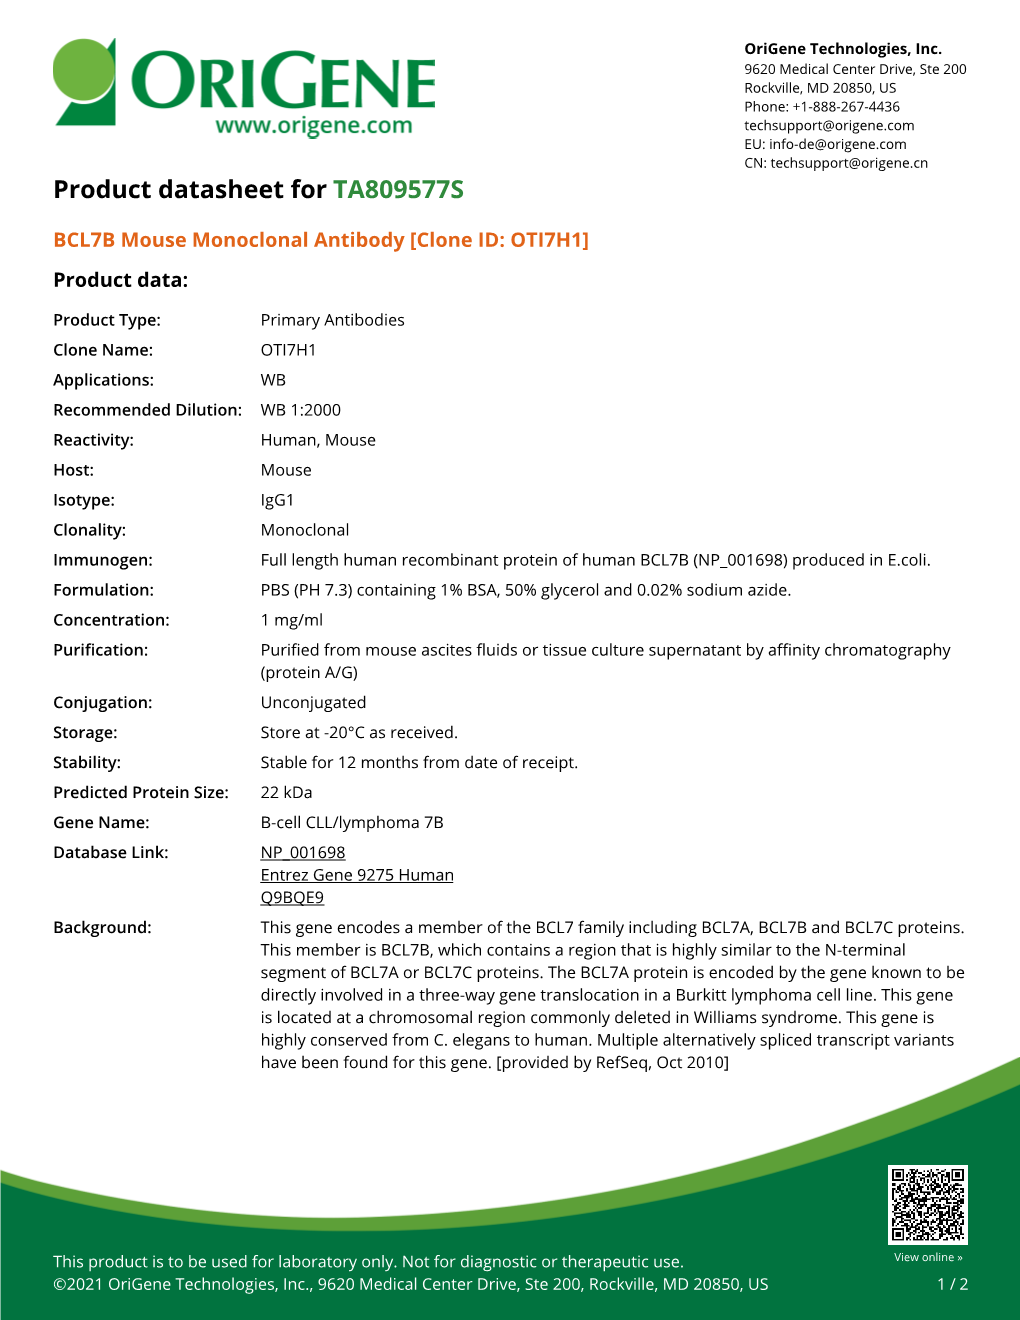 BCL7B Mouse Monoclonal Antibody [Clone ID: OTI7H1] Product Data